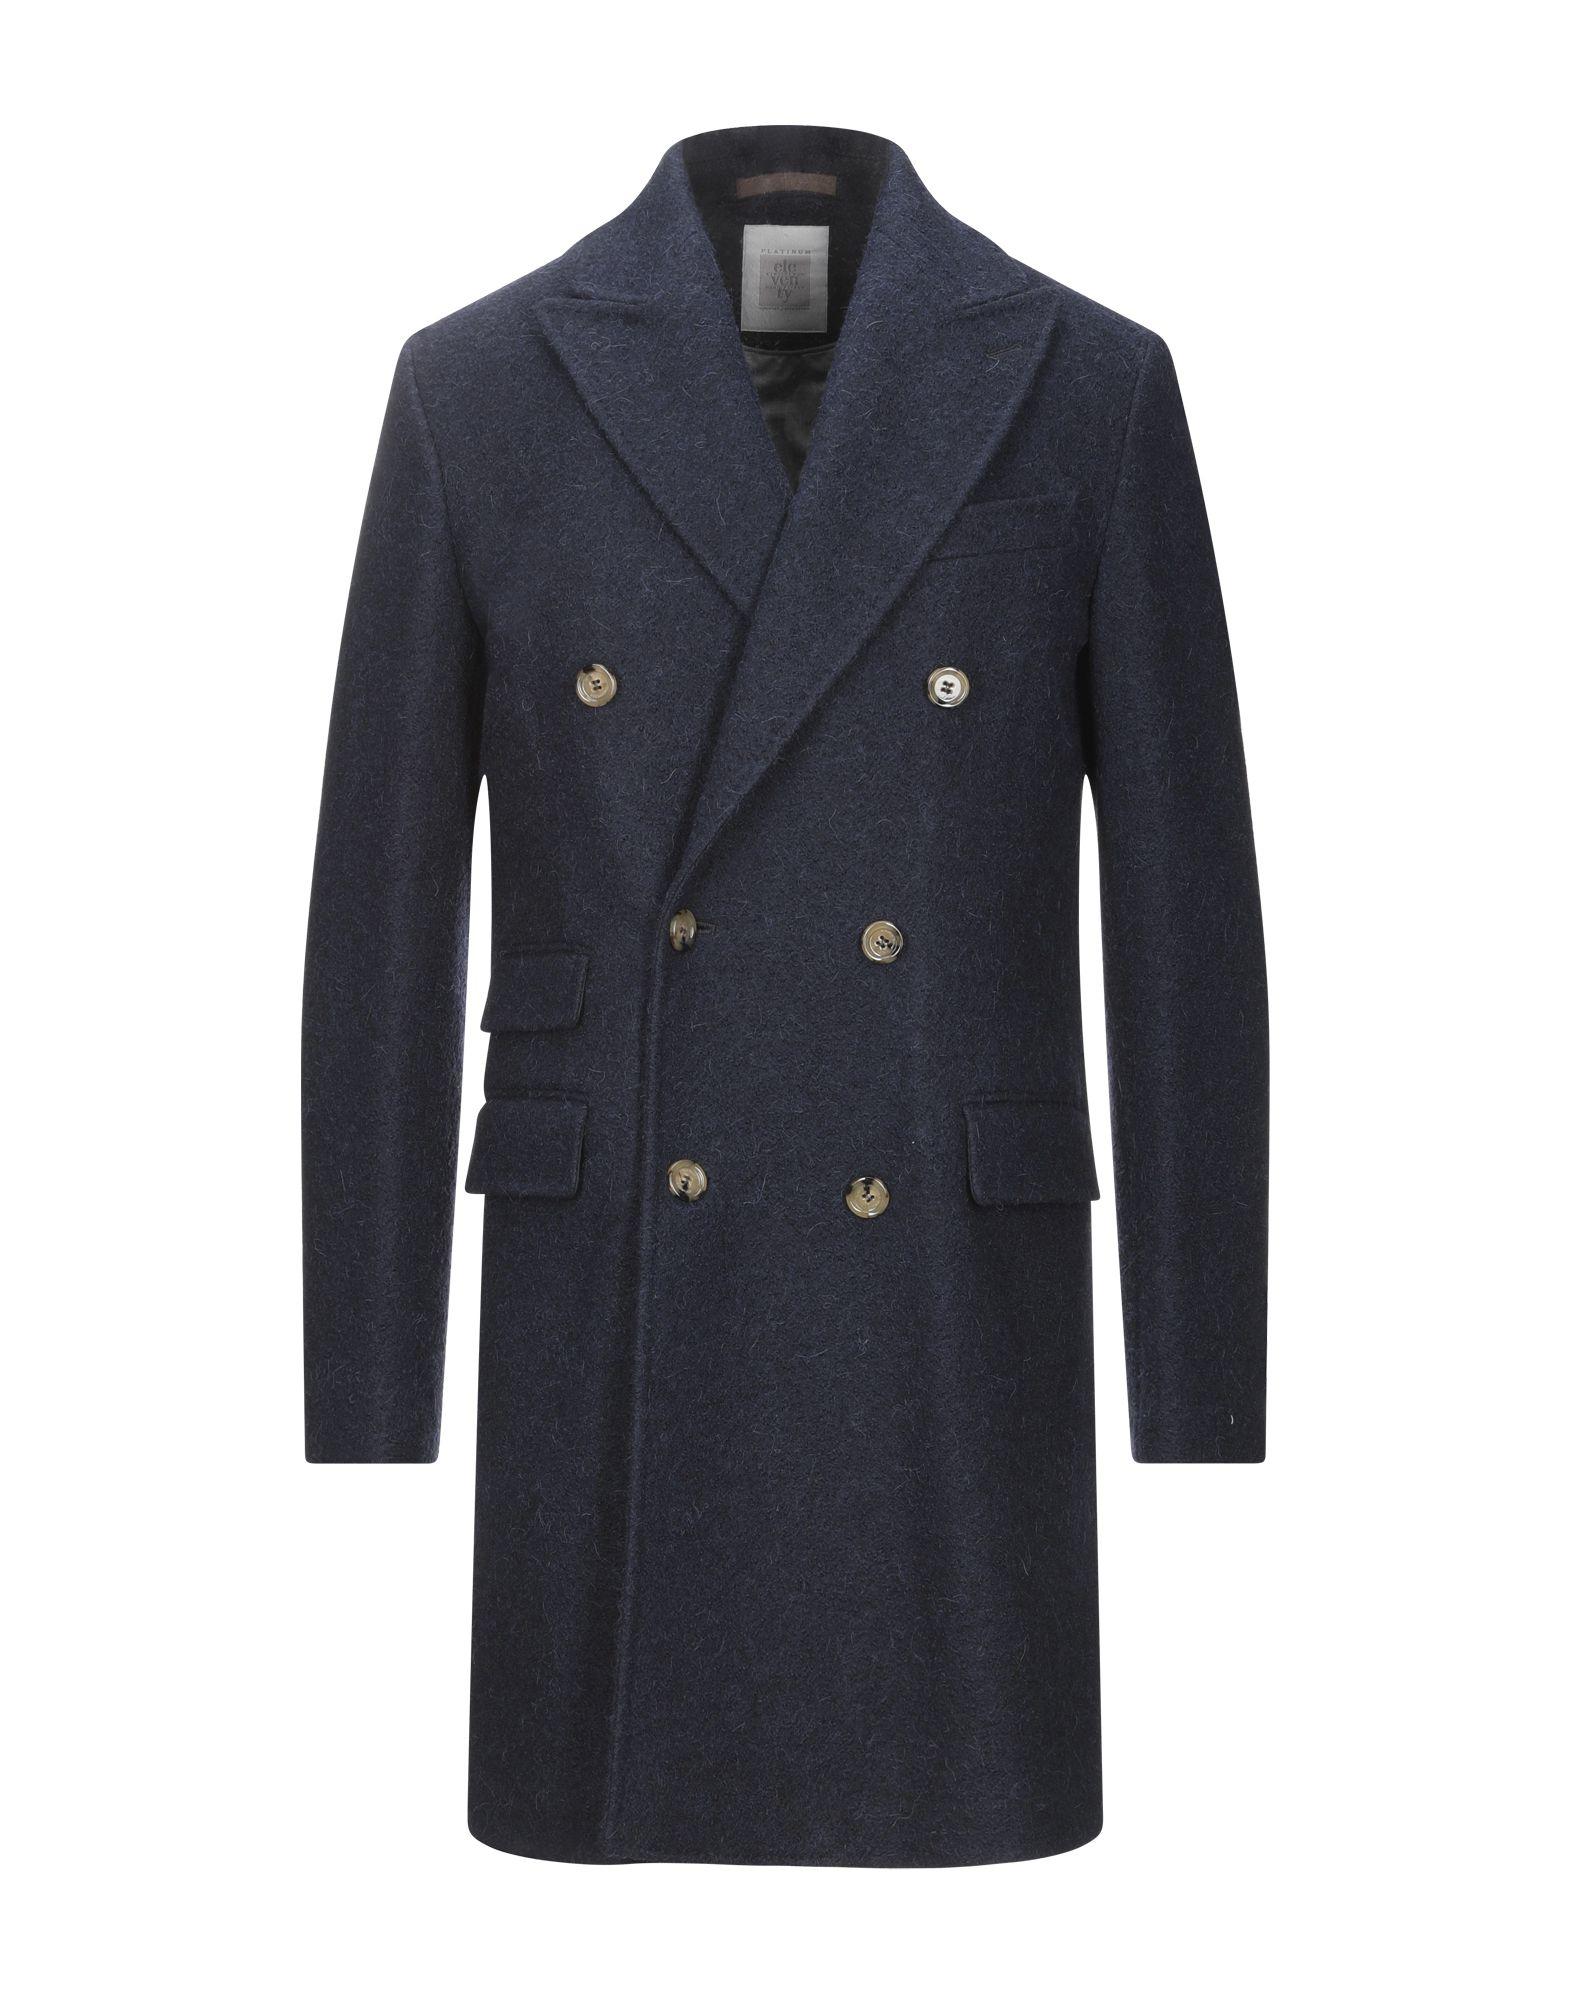 Eleventy Flannel Coat in Dark Blue (Blue) for Men - Lyst